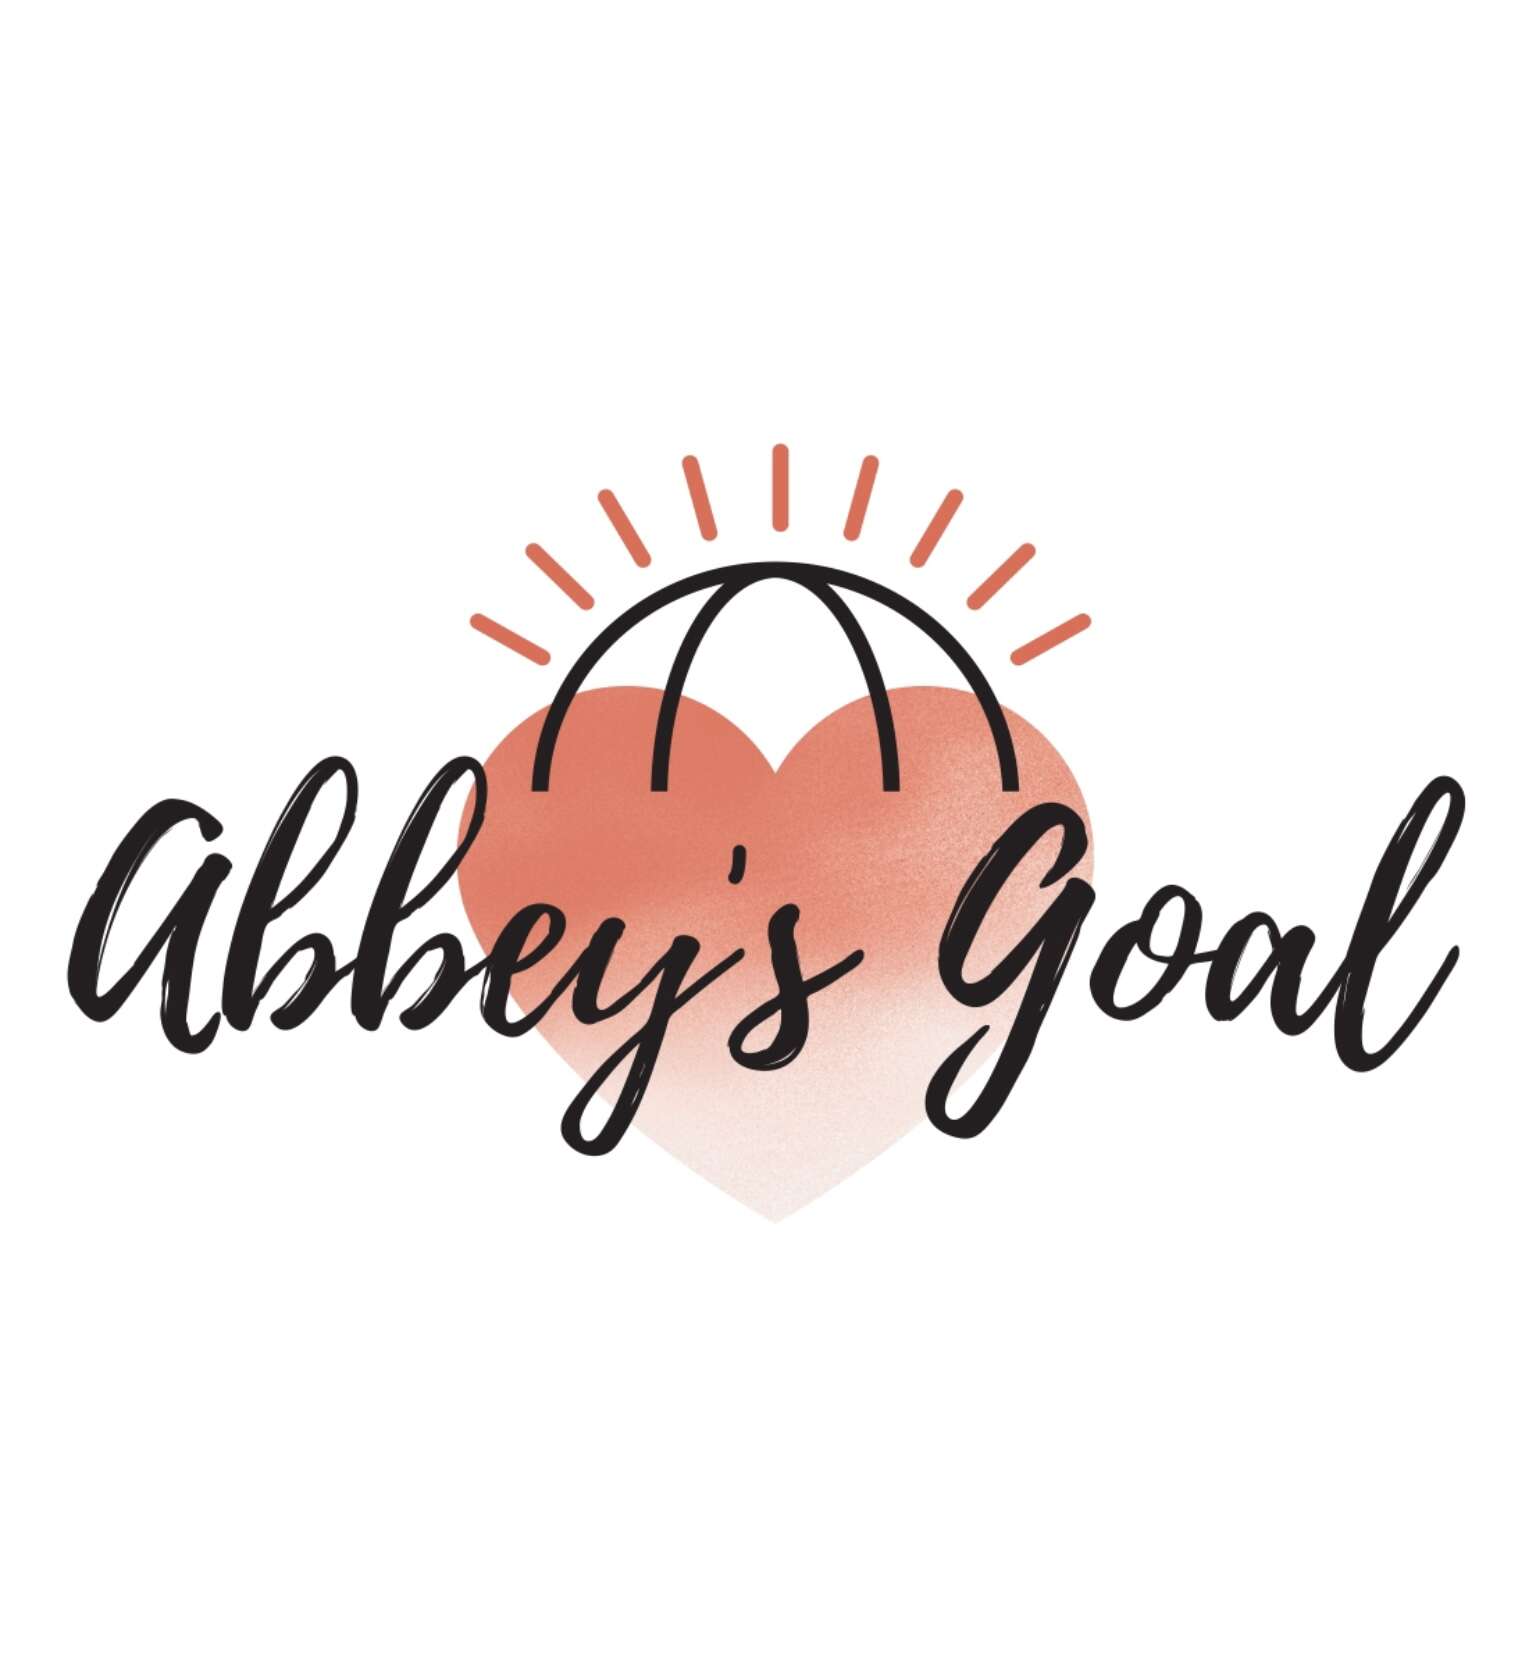 Abbey's Goal